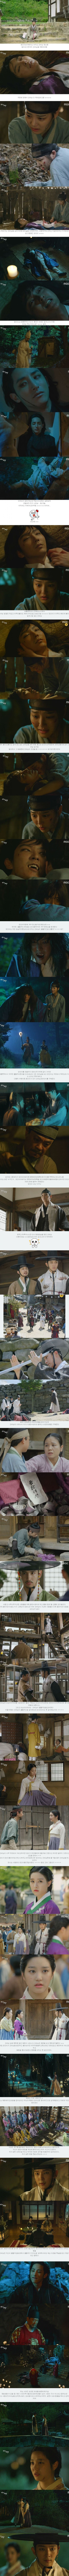 episode 7 captures for the Korean drama 'Scholar Who Walks the Night'